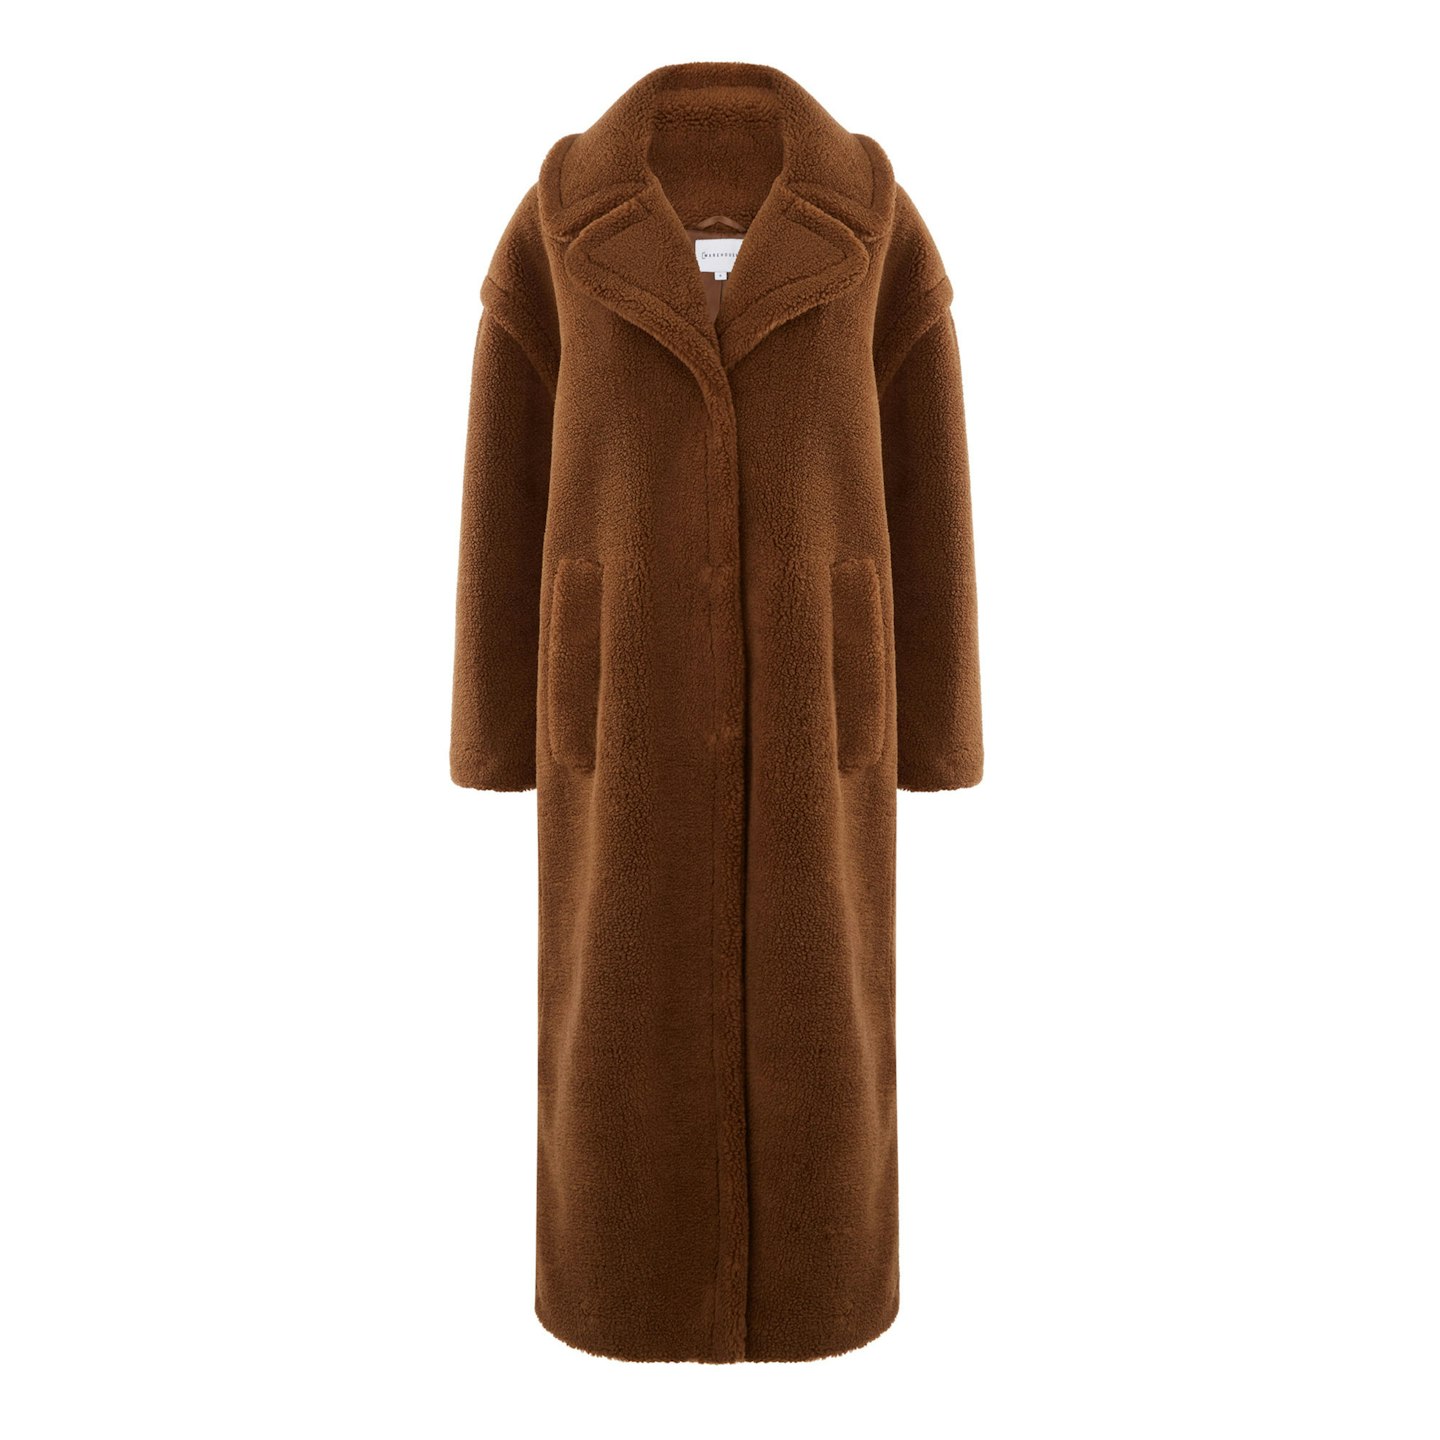 Warehouse, Maxi Faux Fur Coat, £99